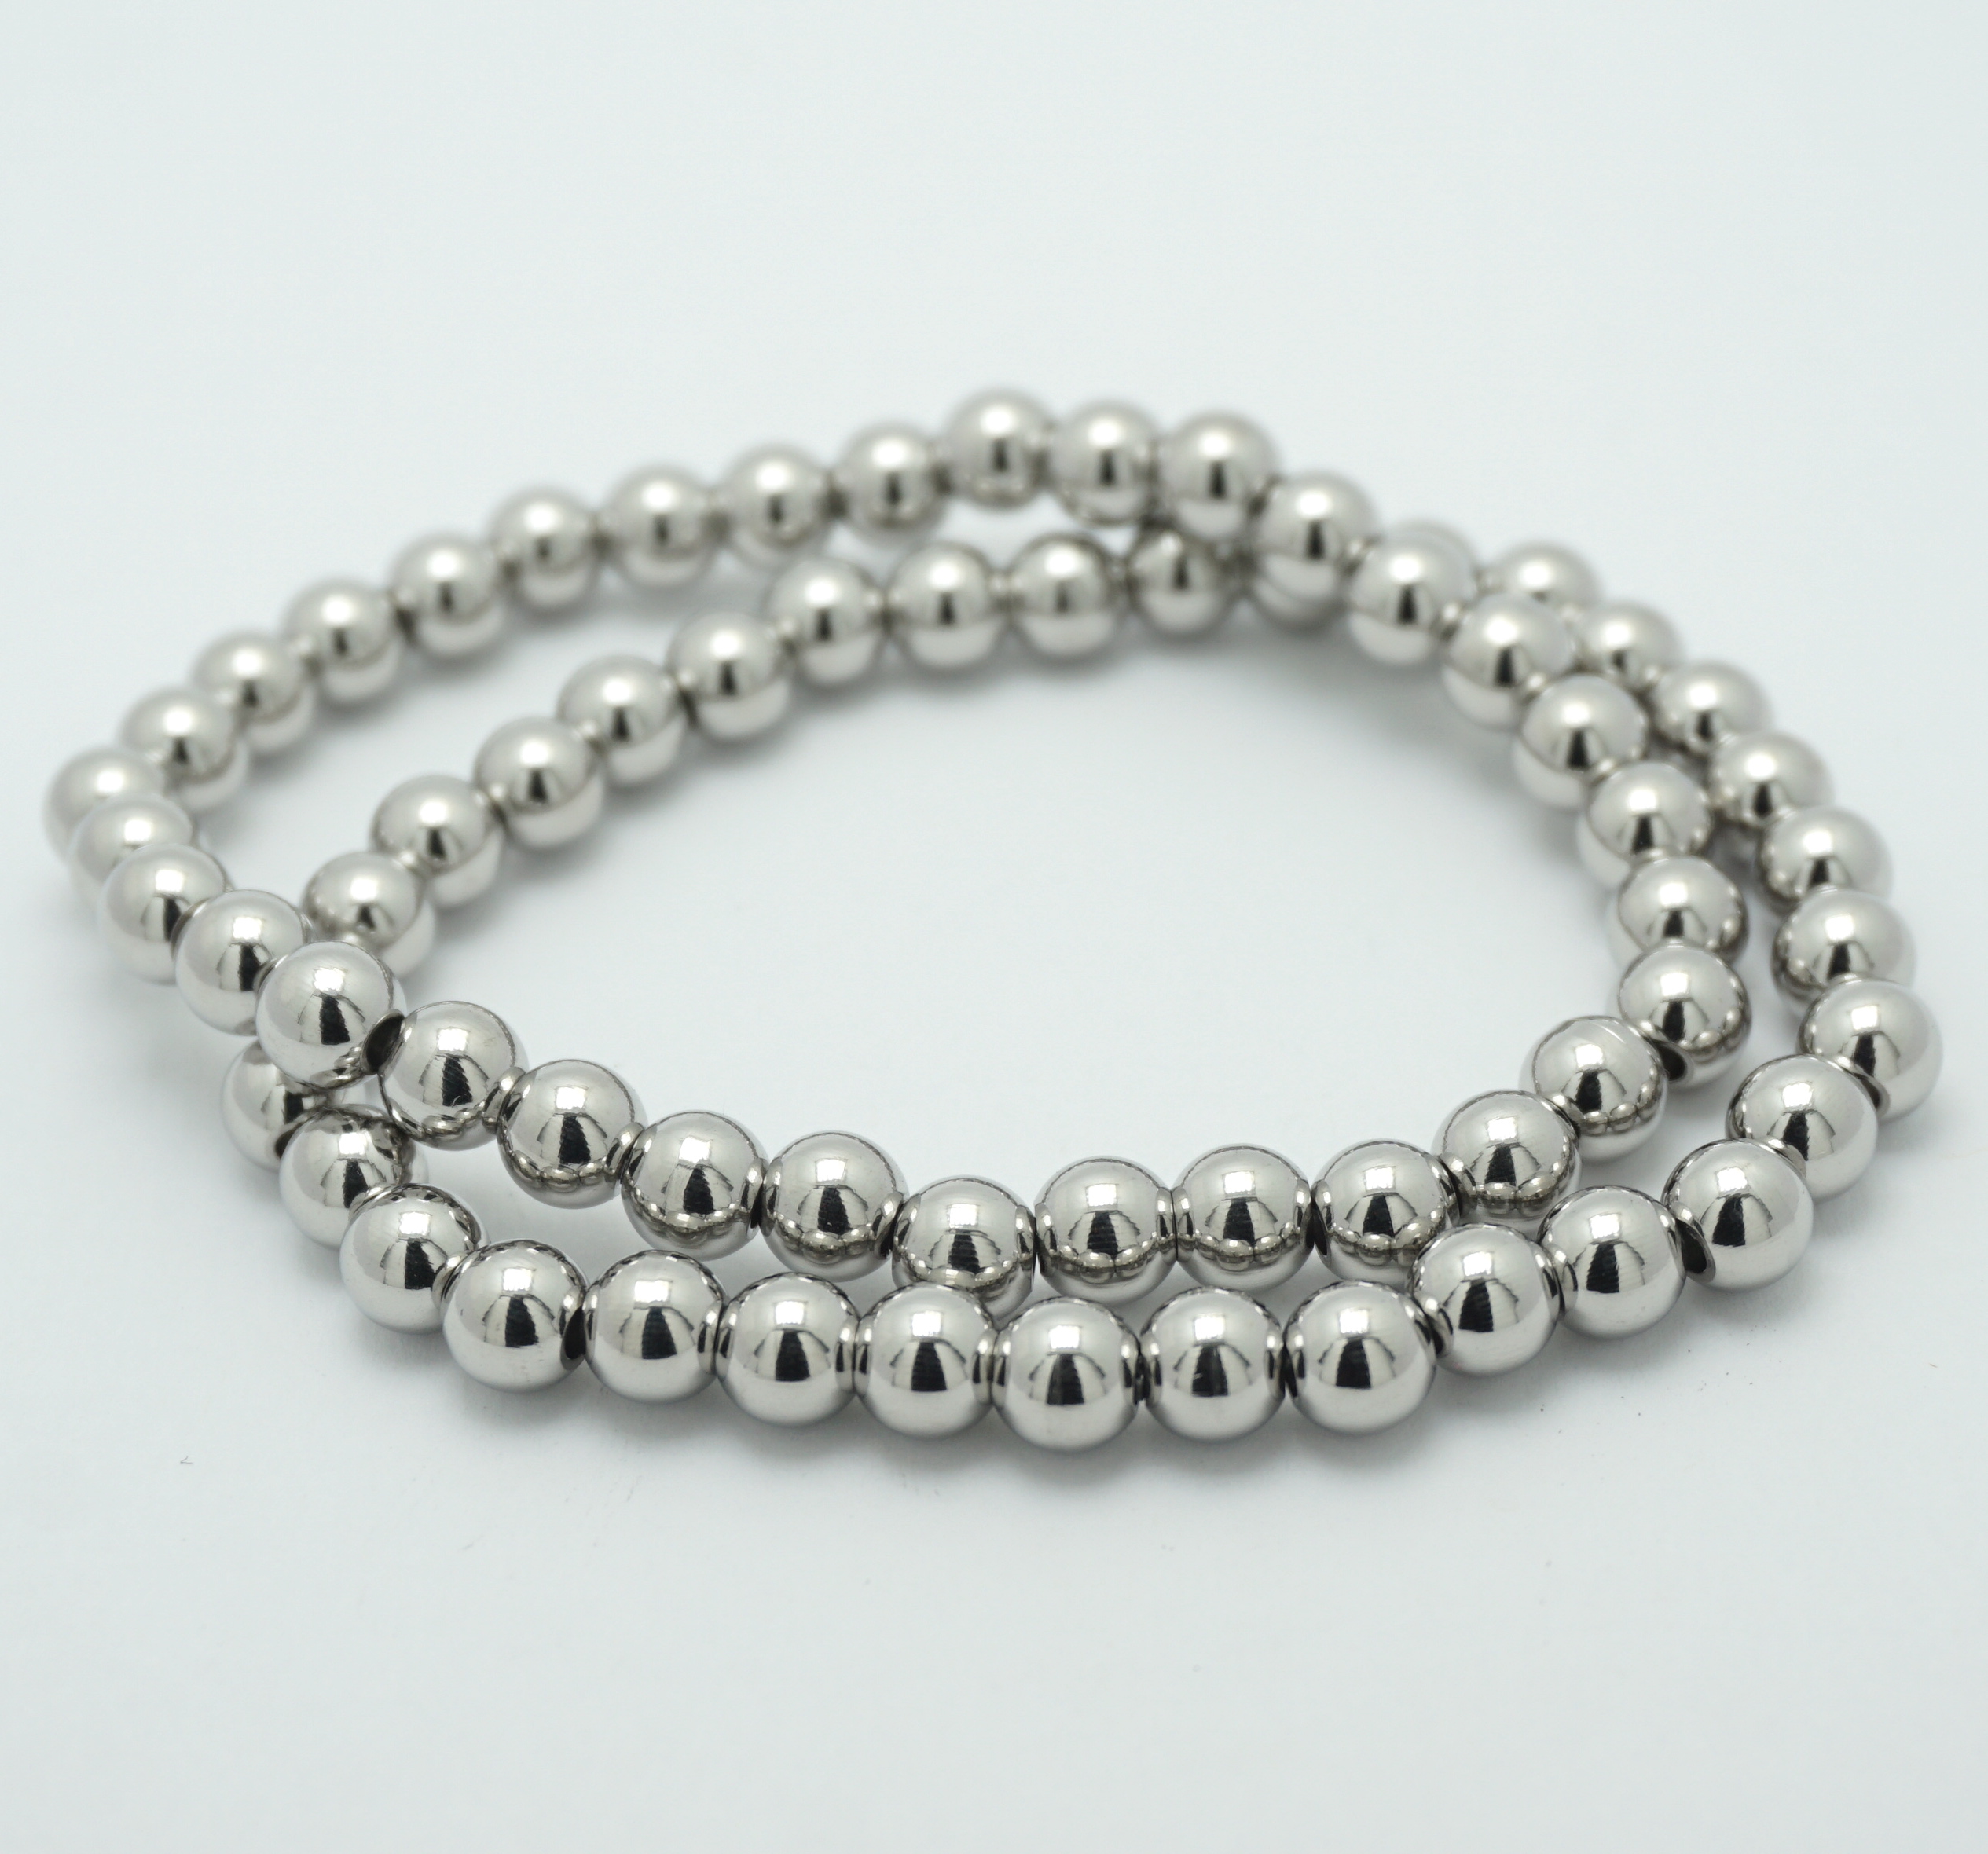 Stretch Ball Bracelets in Silver